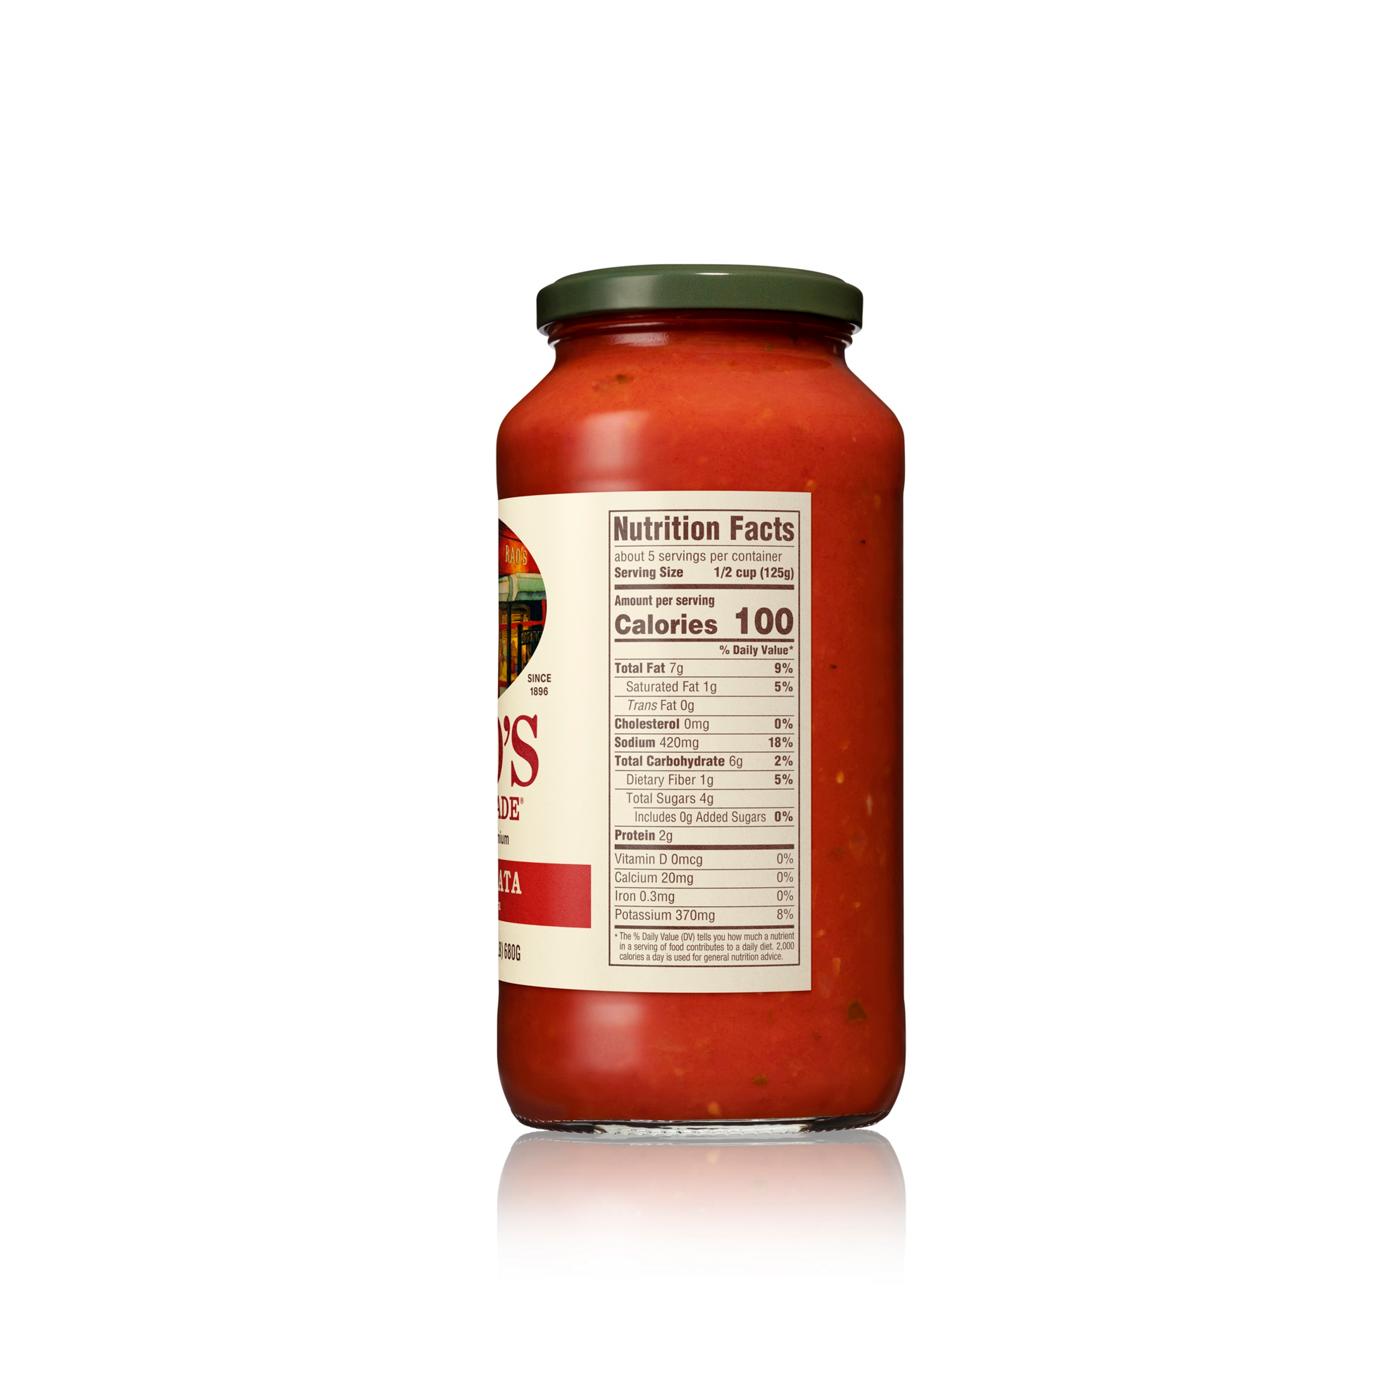 Rao's Homemade Arrabbiata Spicy Tomato Sauce; image 2 of 4